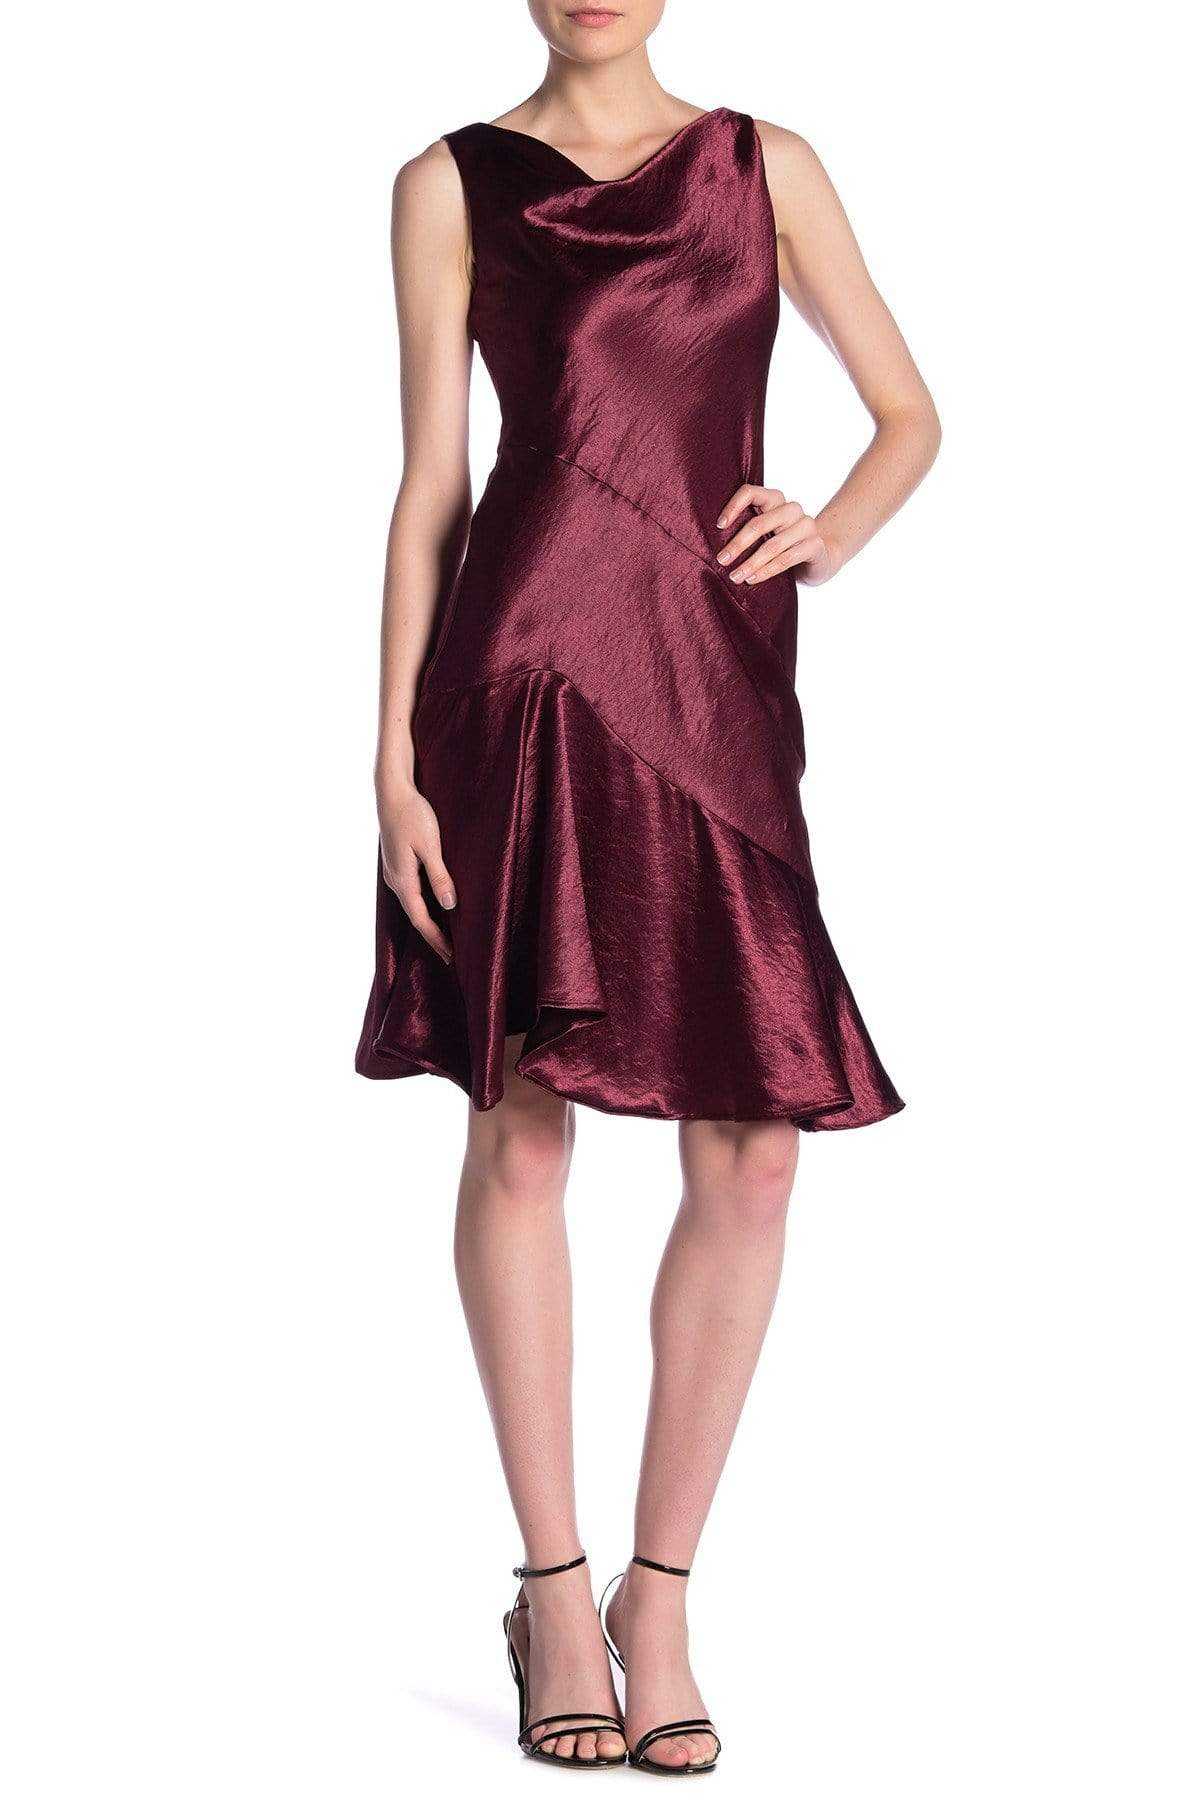 Taylor, Taylor - 9973M Cowl Neck Satin Asymmetrical Hemmed Dress